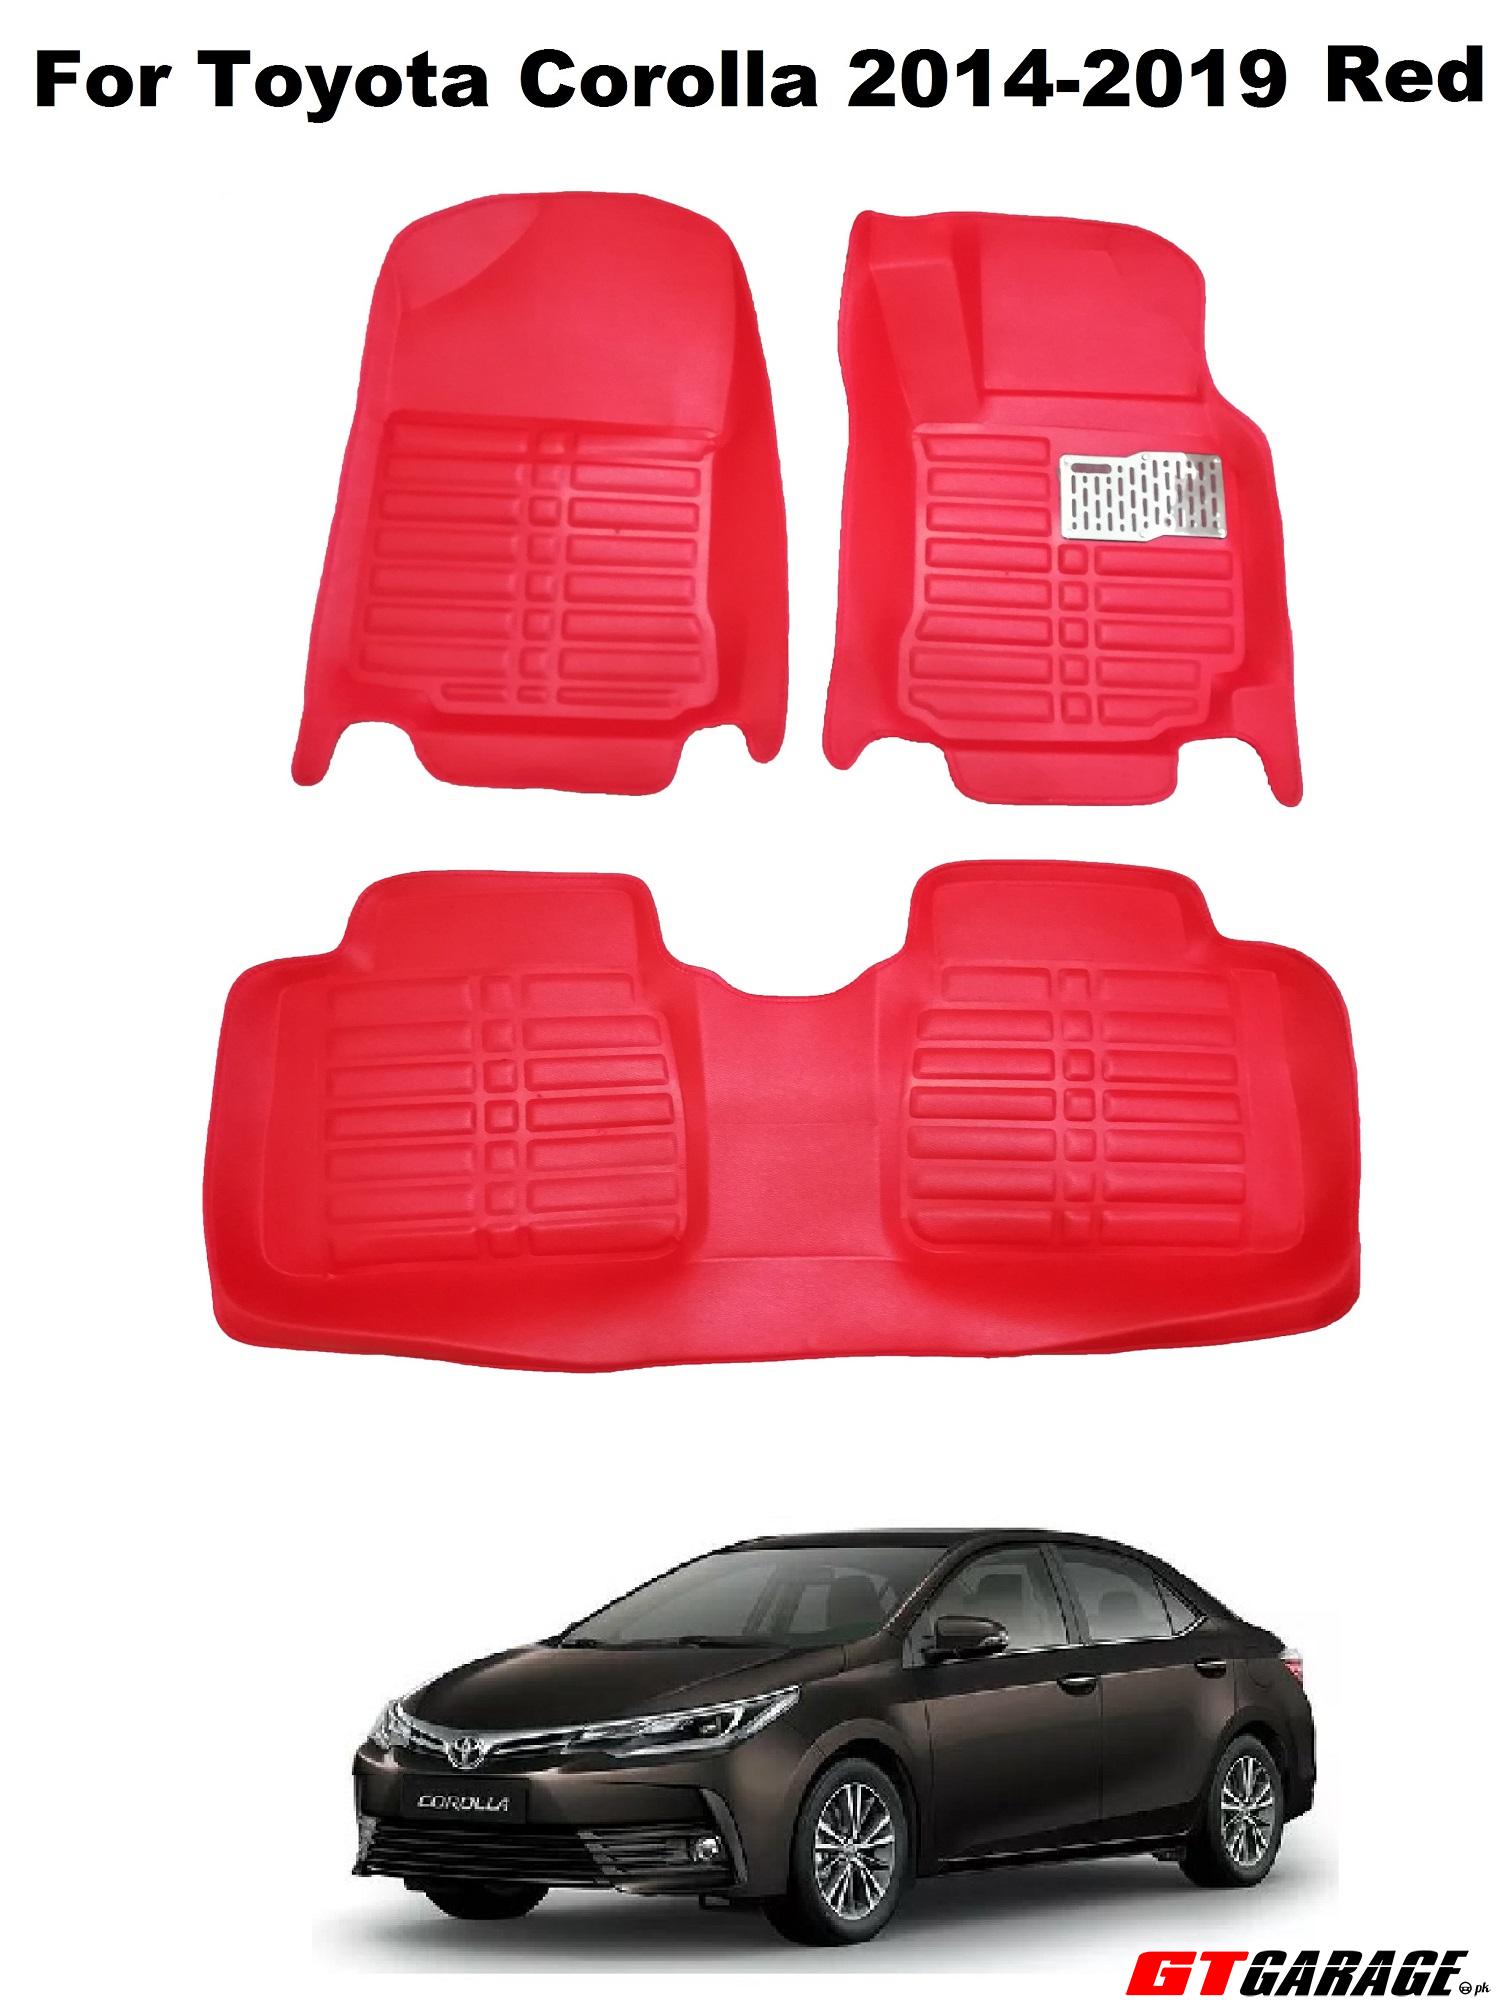 Buy 5D Custom Floor Mats For Toyota Corolla 2014-2019 Online at Best Price in Pakistan | GTGarage.PK